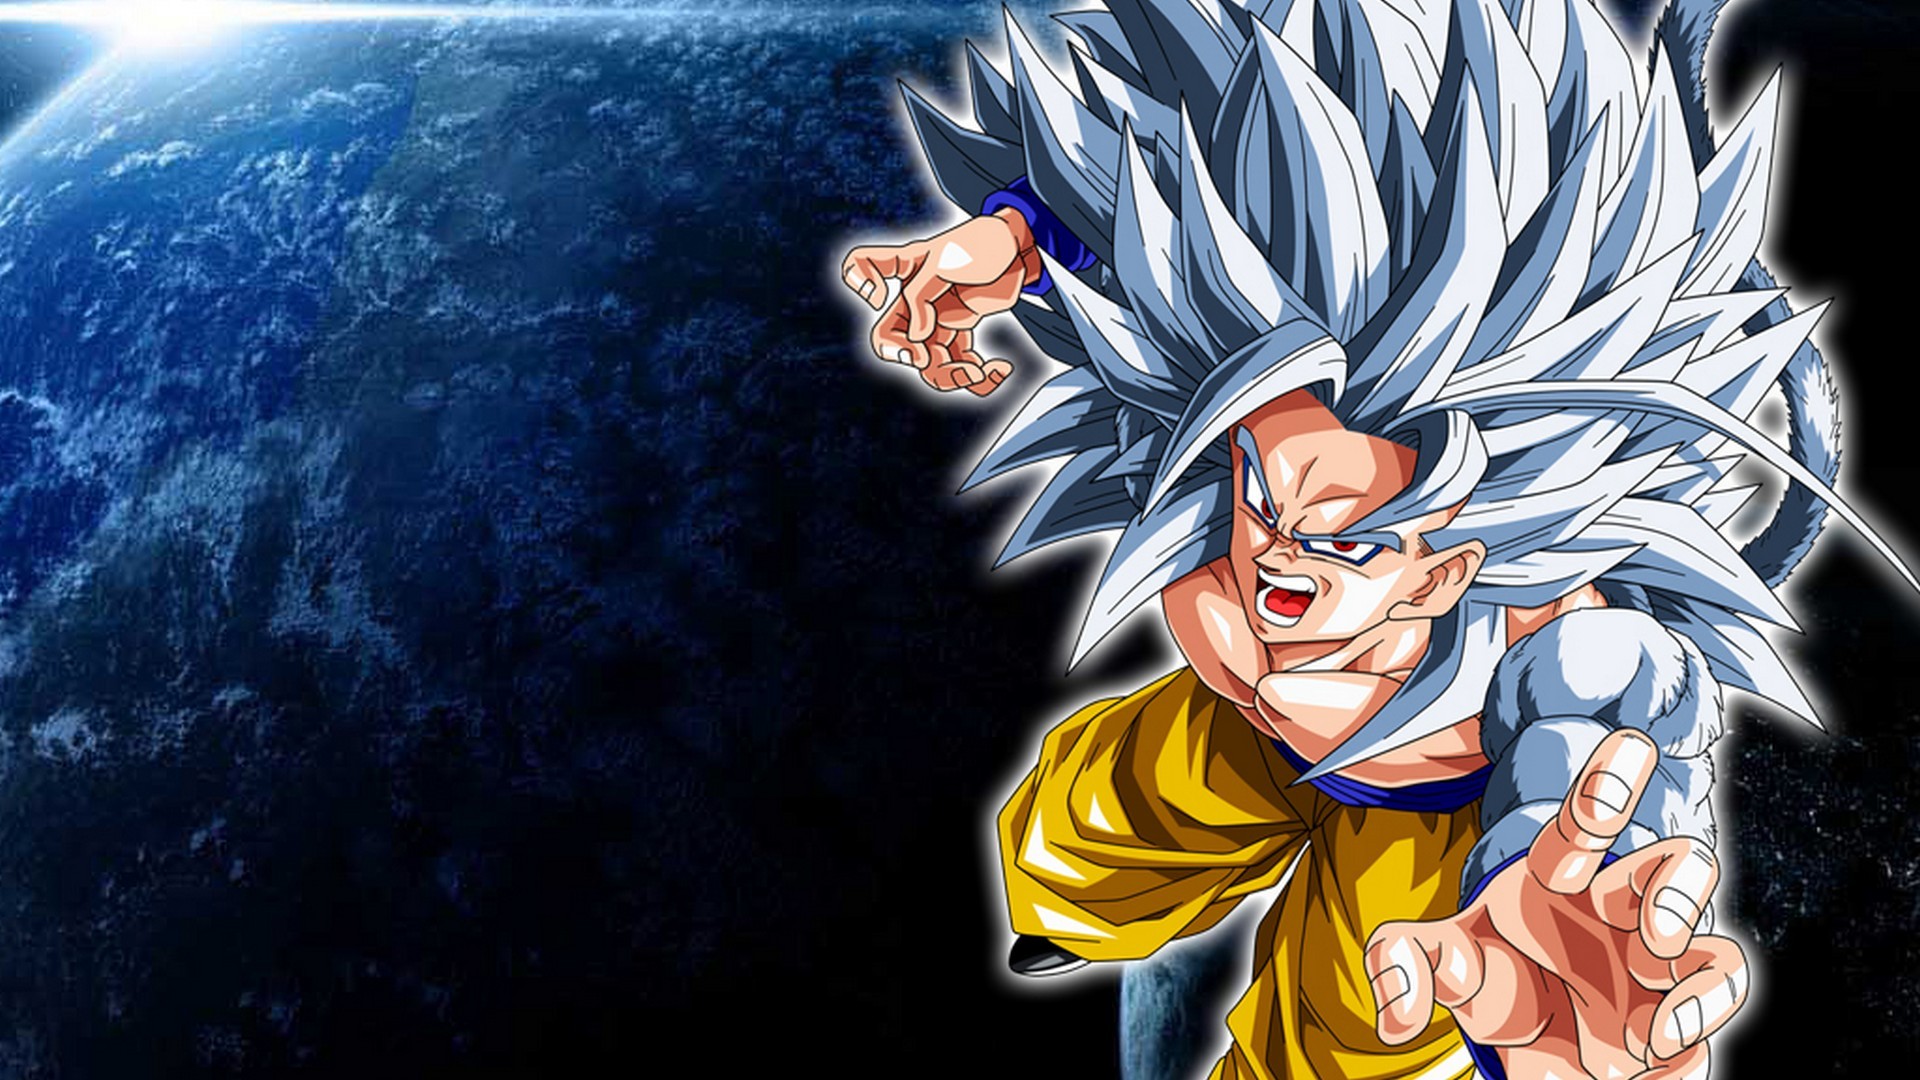 Goku Super Saiyan 5 Wallpaper is the best high-resolution screensaver pictu...